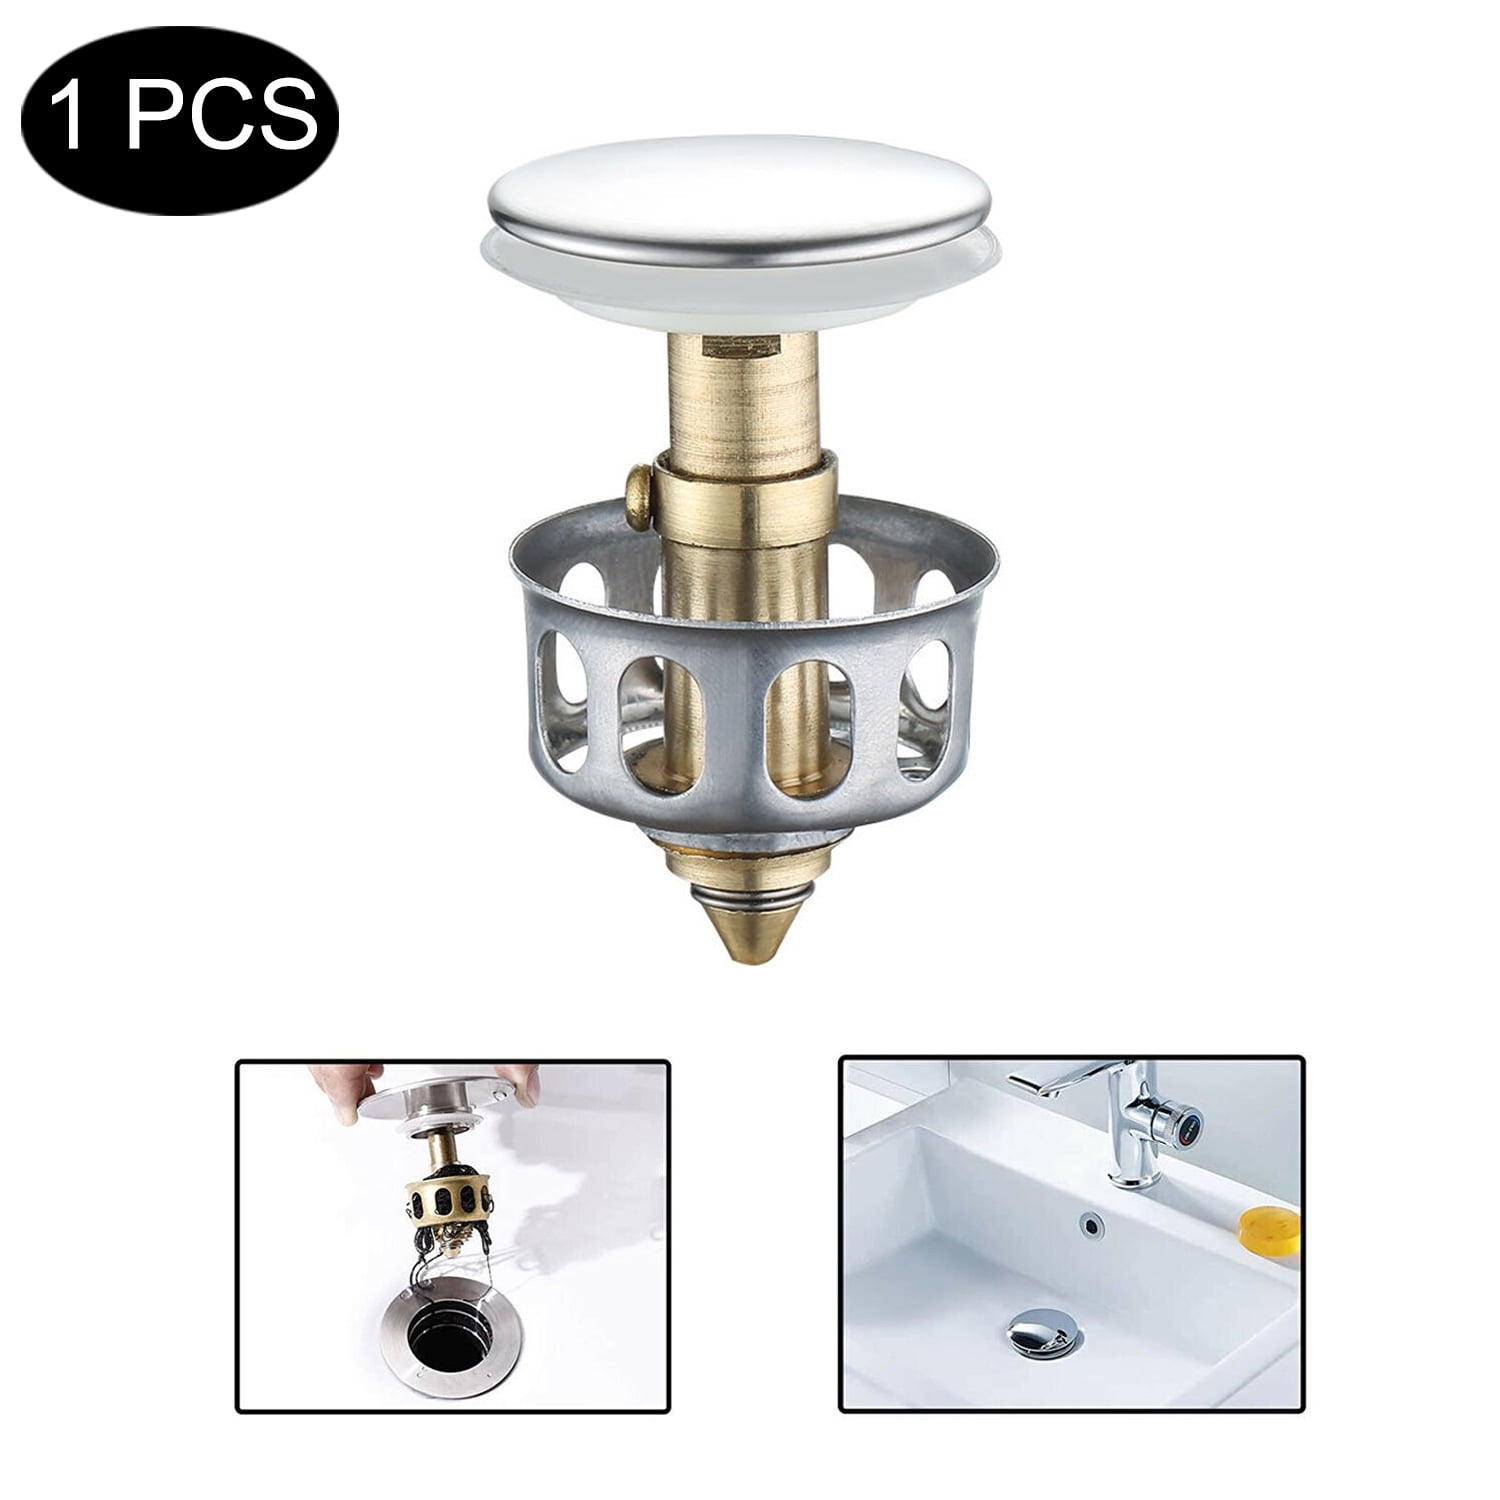 Universal wash basin bounce drain filter Pop-Up Bathroom Sink Drain Plug Tool 